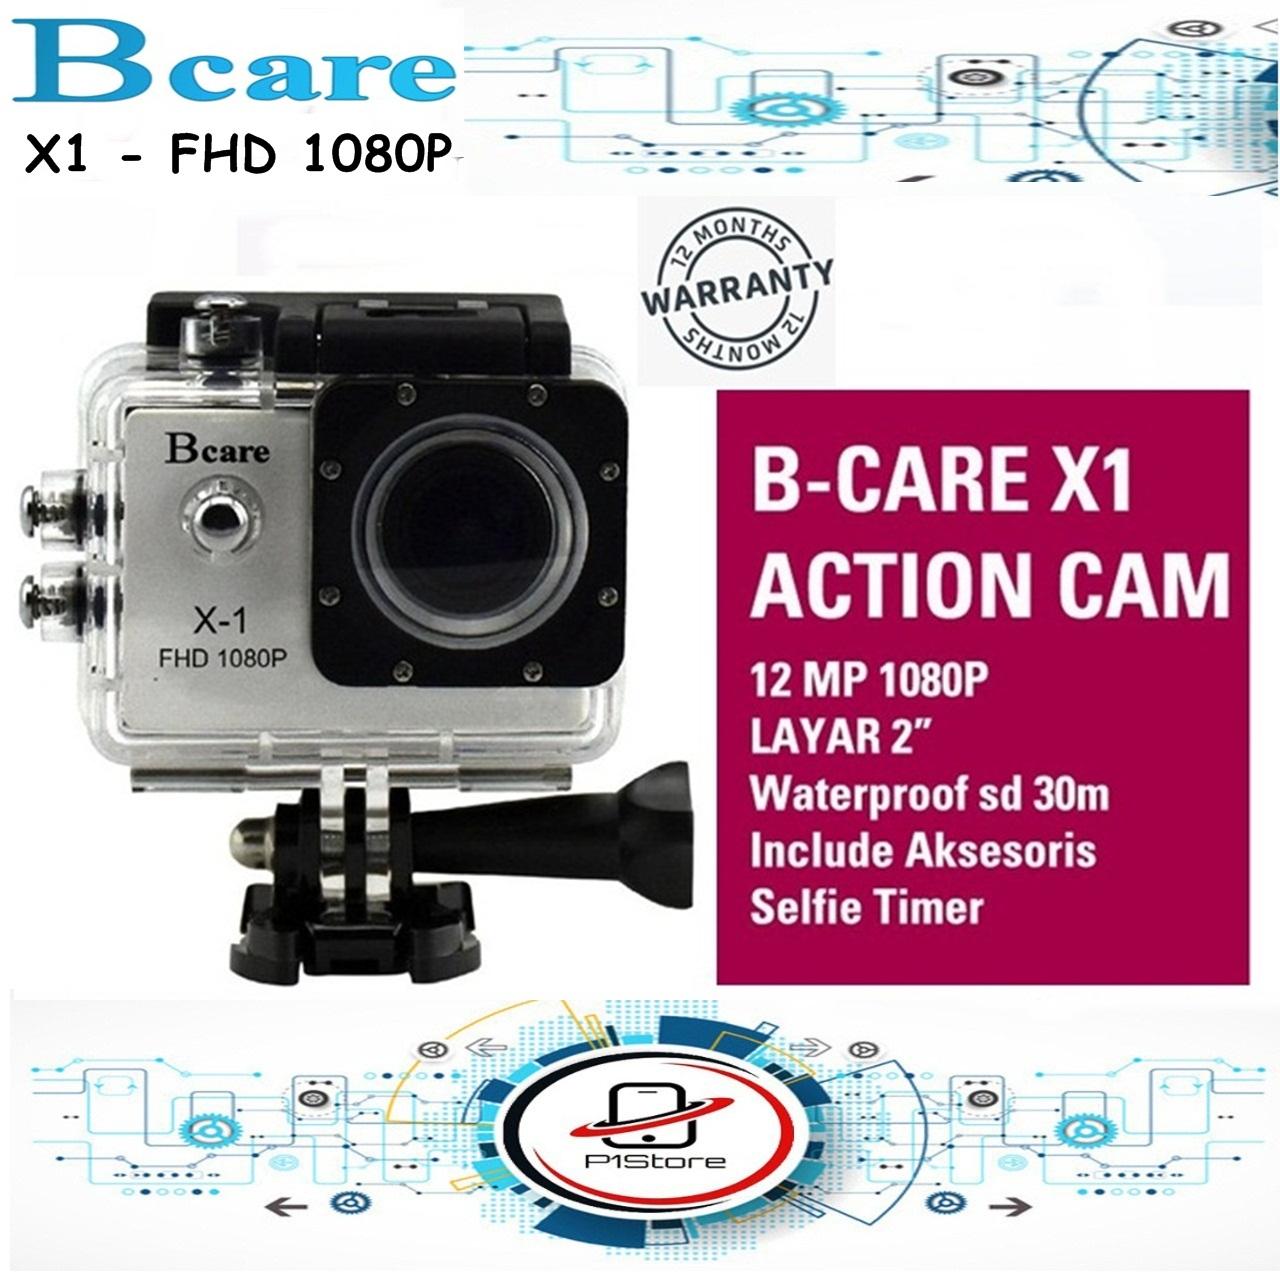 Bcare BCam X1 Action Camera 12 MP 1080 P layar 2